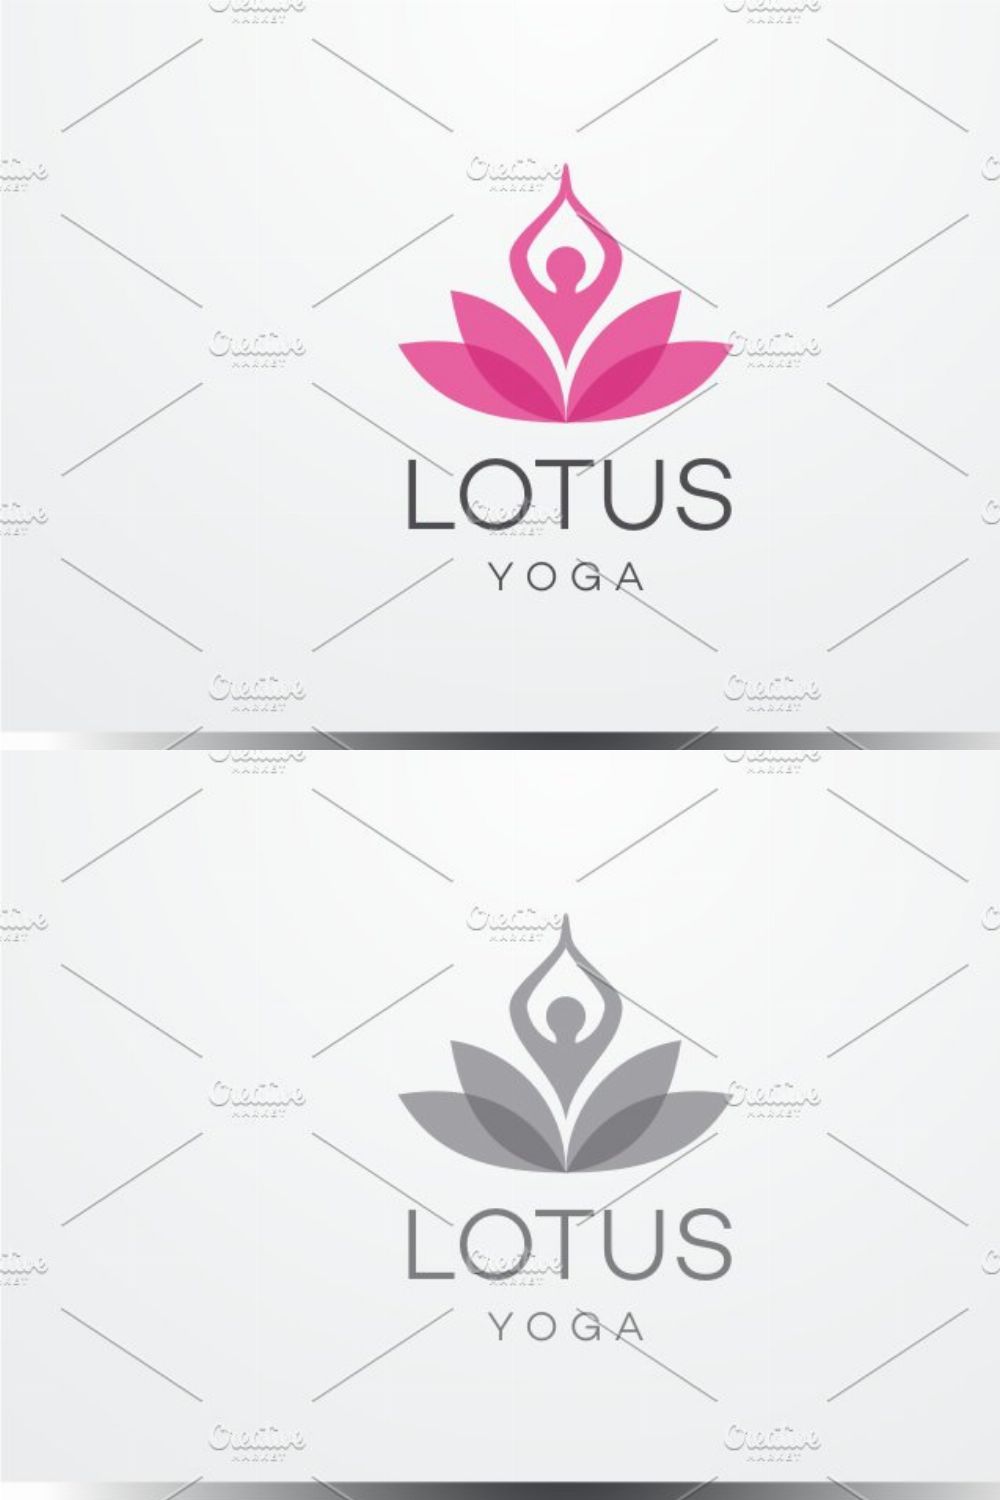 Lotus Yoga Logo pinterest preview image.